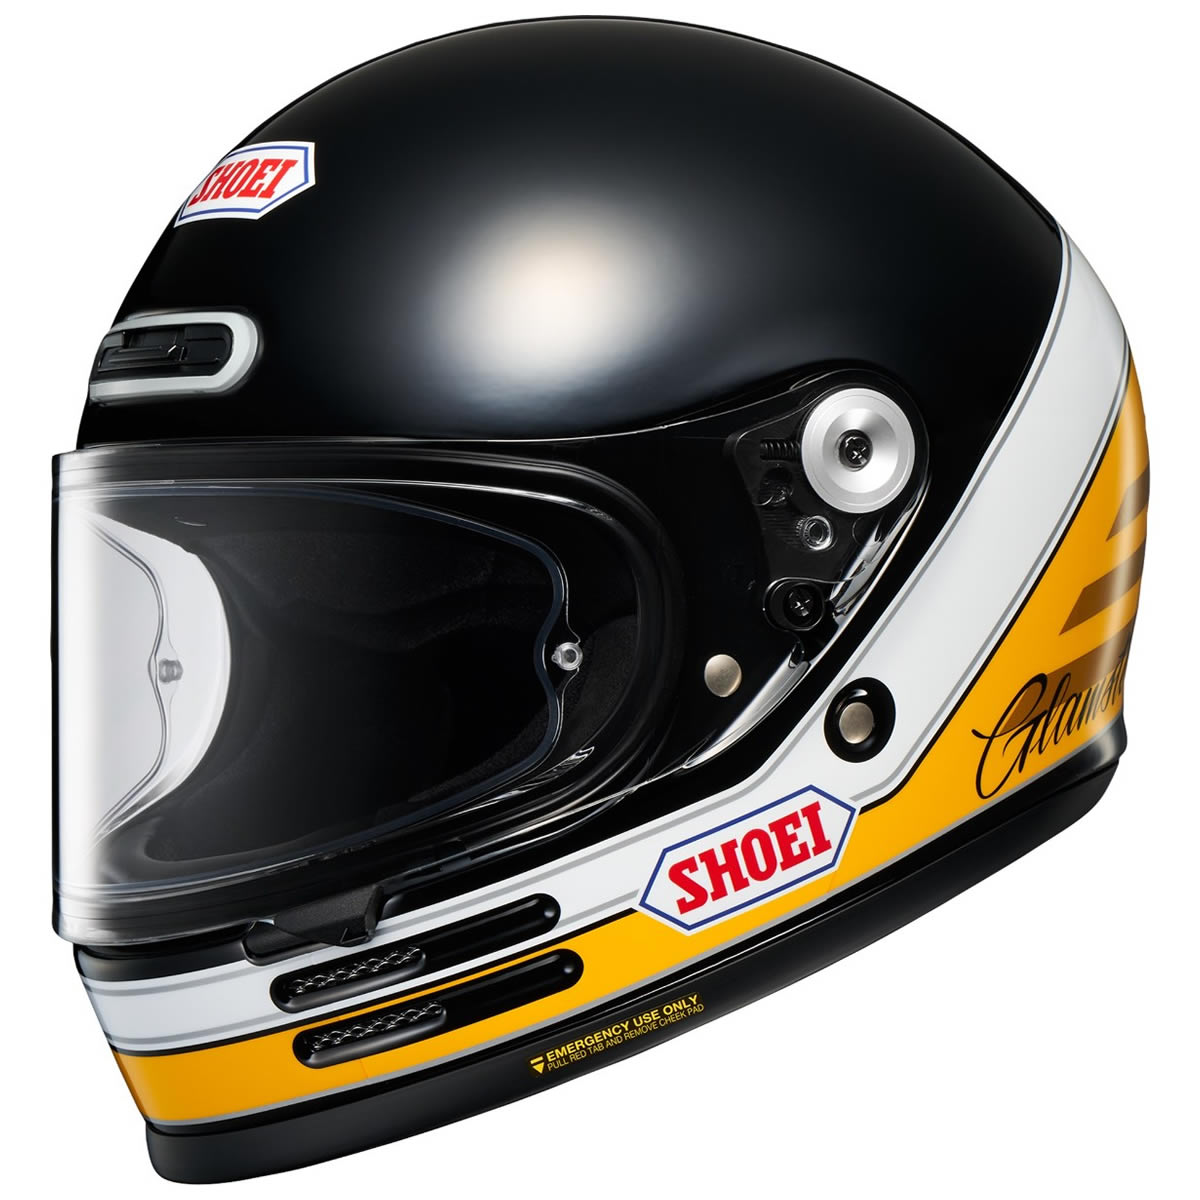 Shoei Glamster06 Abiding TC-3 Helm, schwarz-gelb-weiß